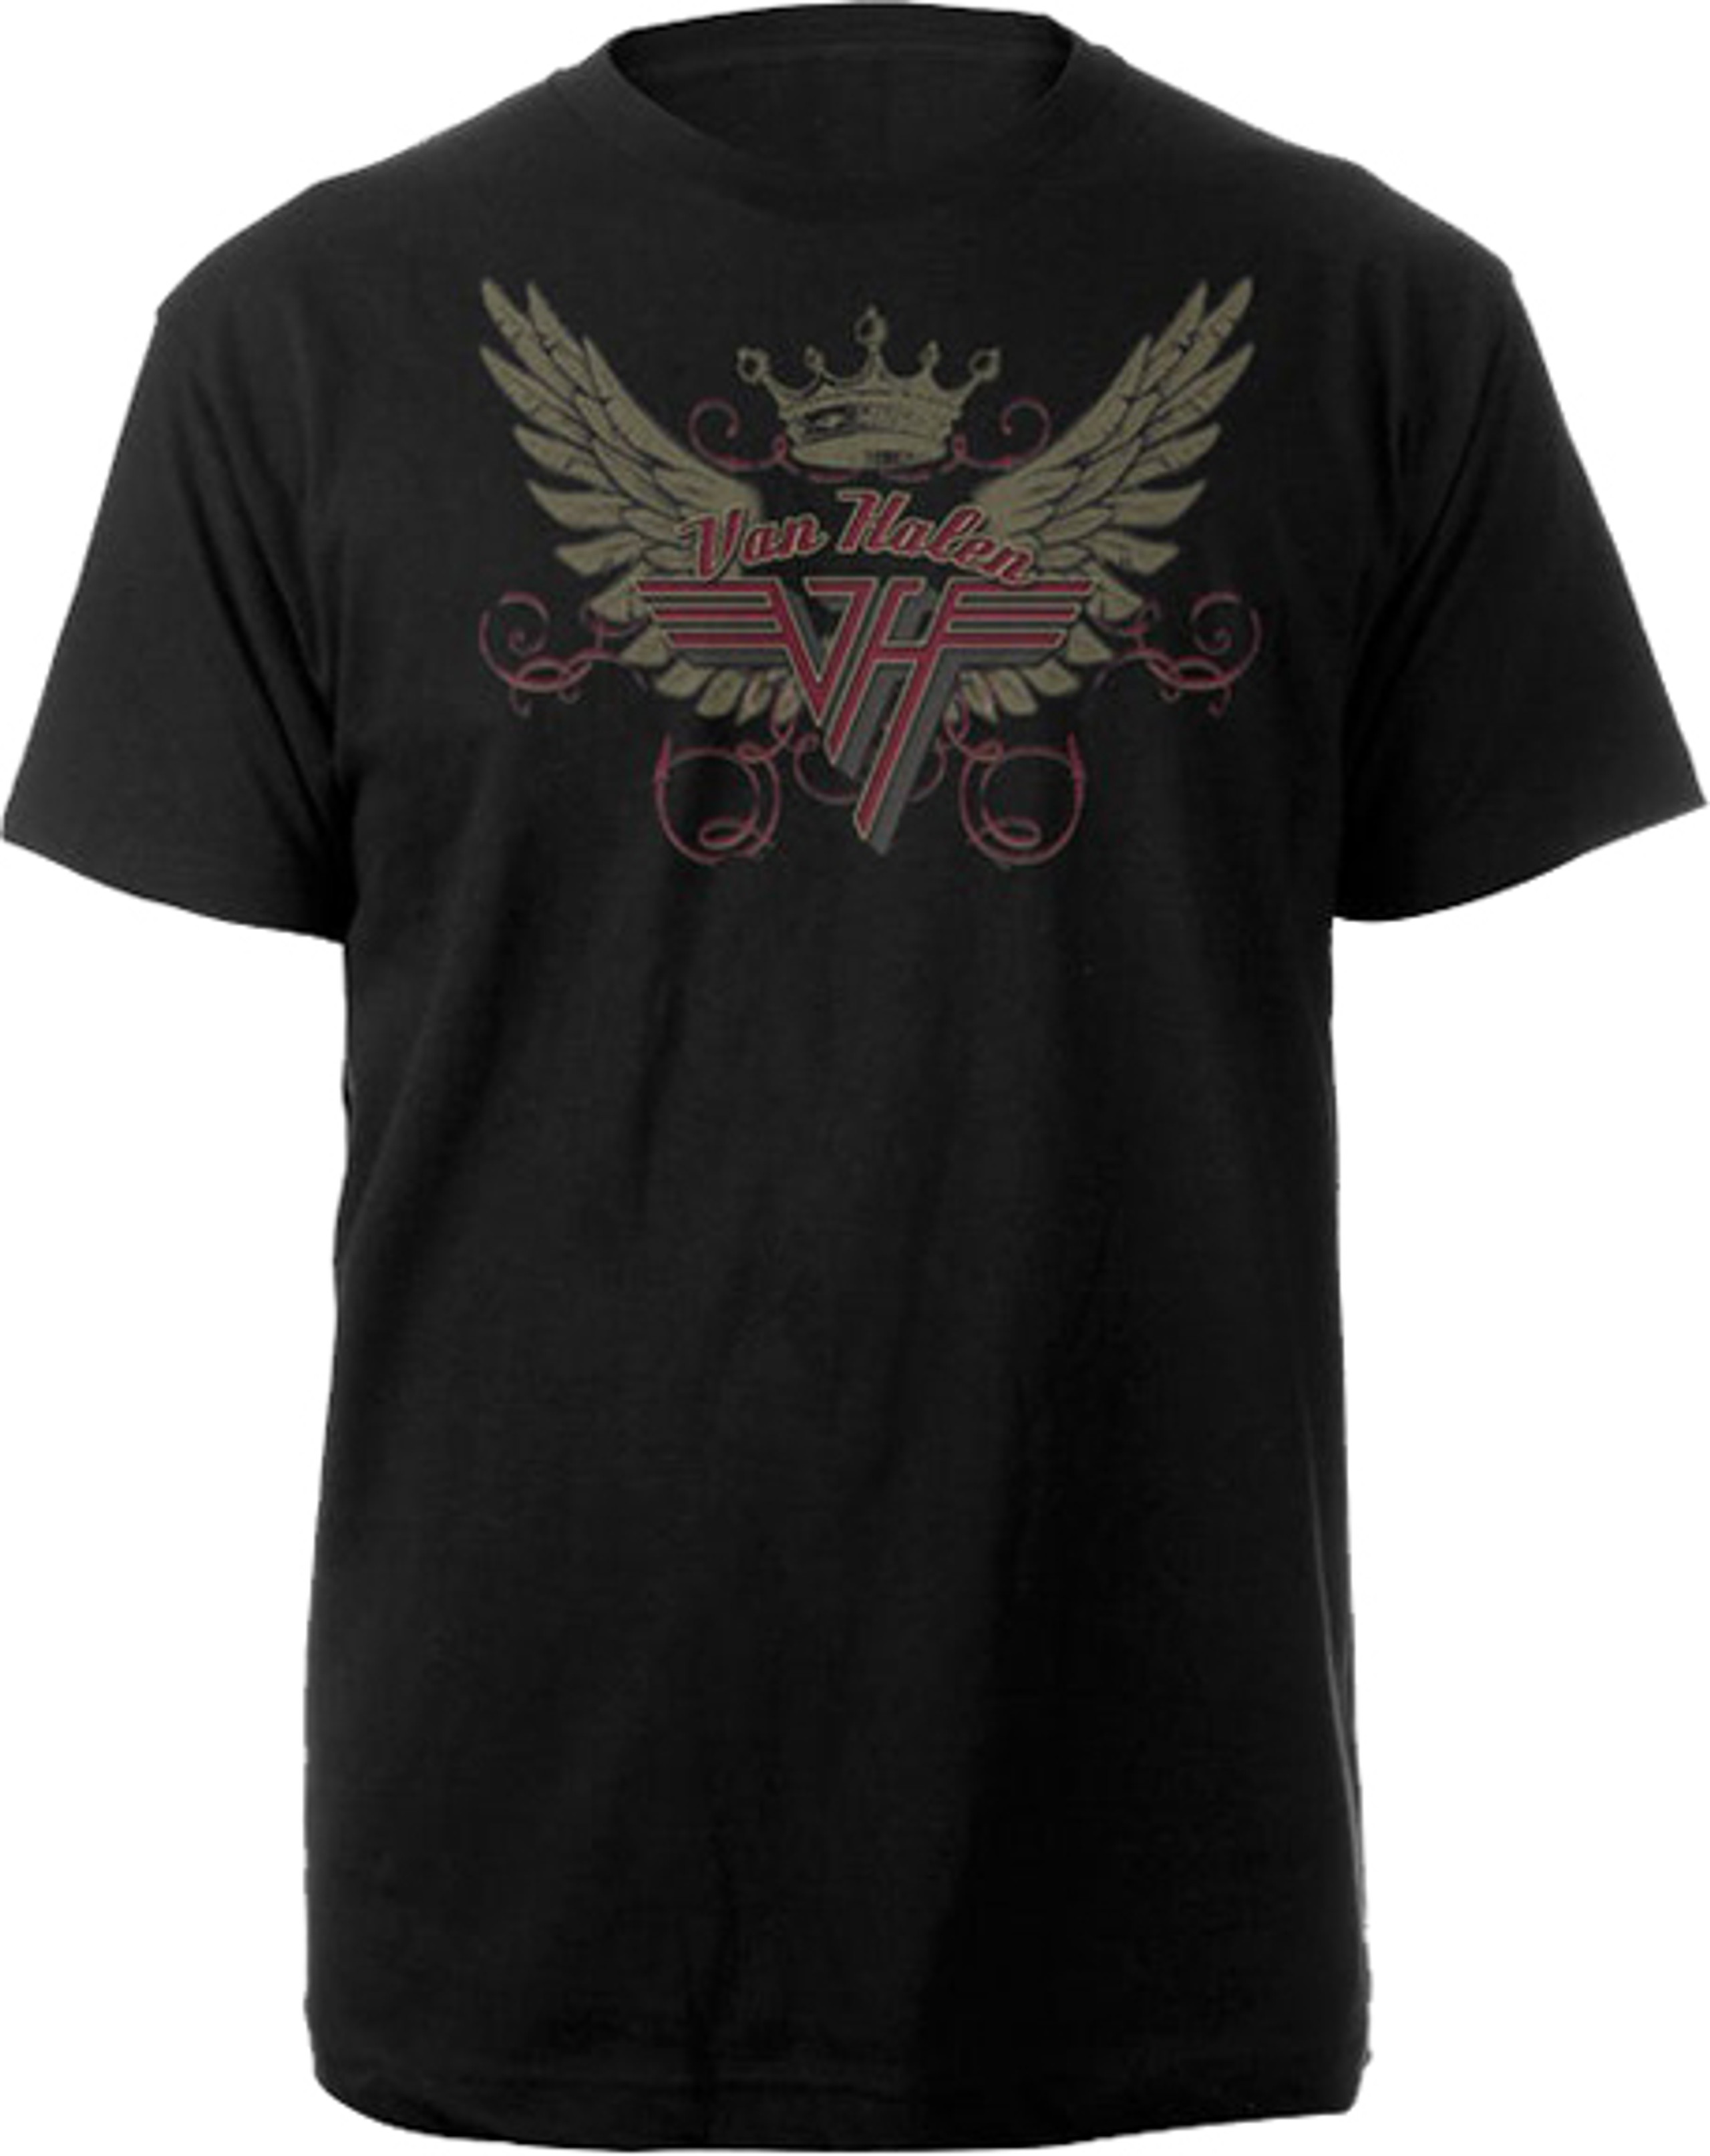 Van Halen Biker Pin Up T-Shirt | Vintage Classic Rock T-Shirt